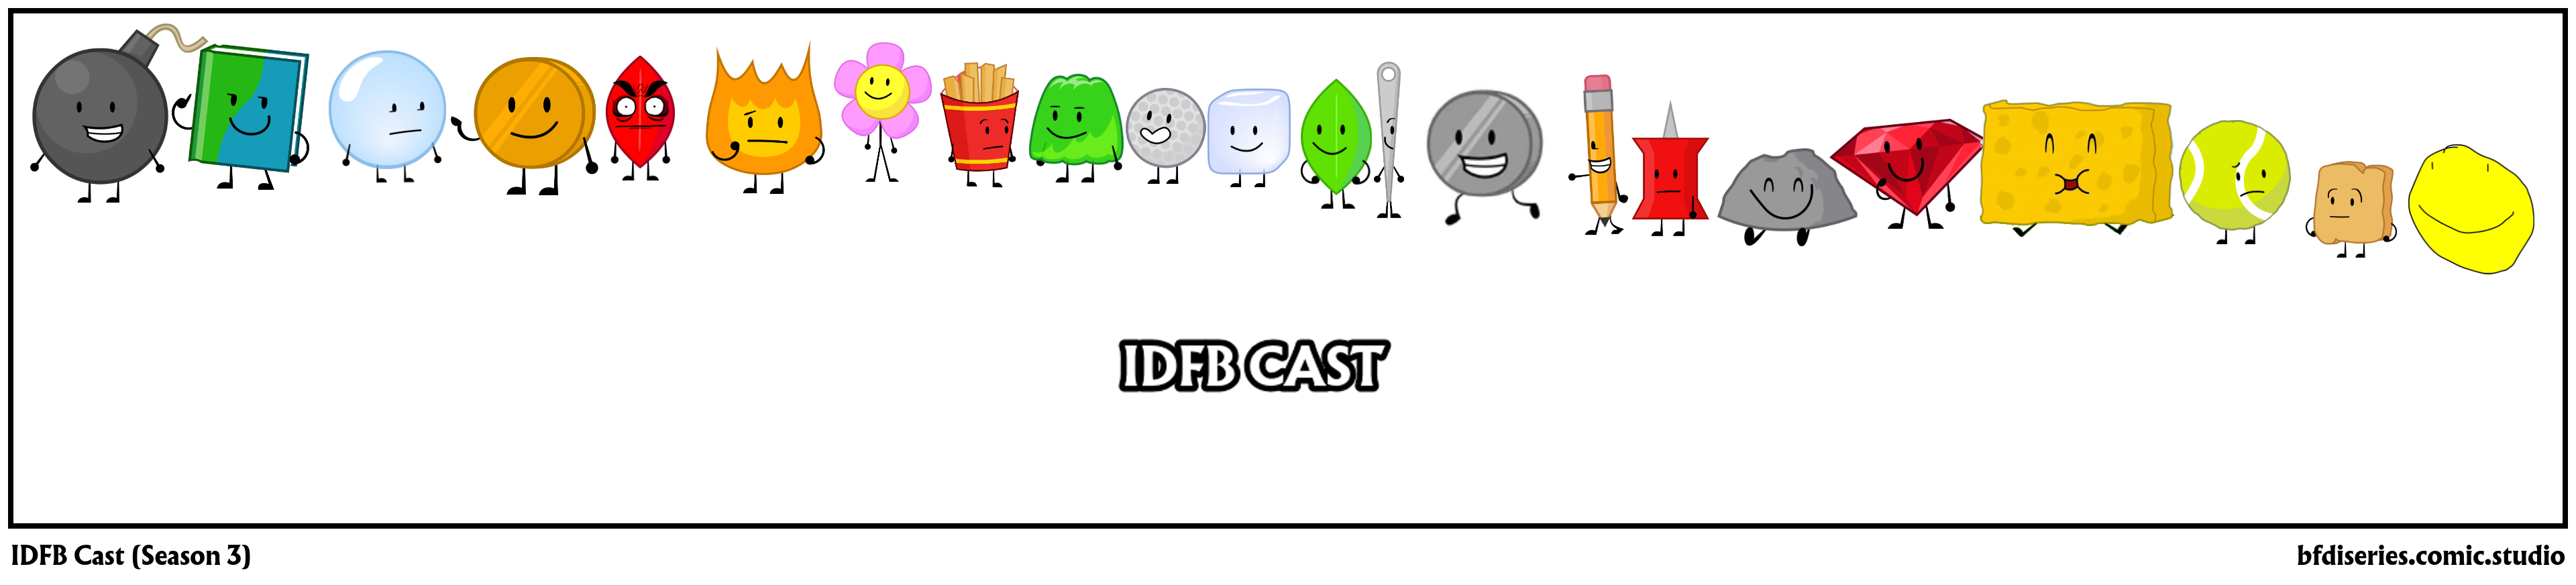 IDFB Cast (Season 3)